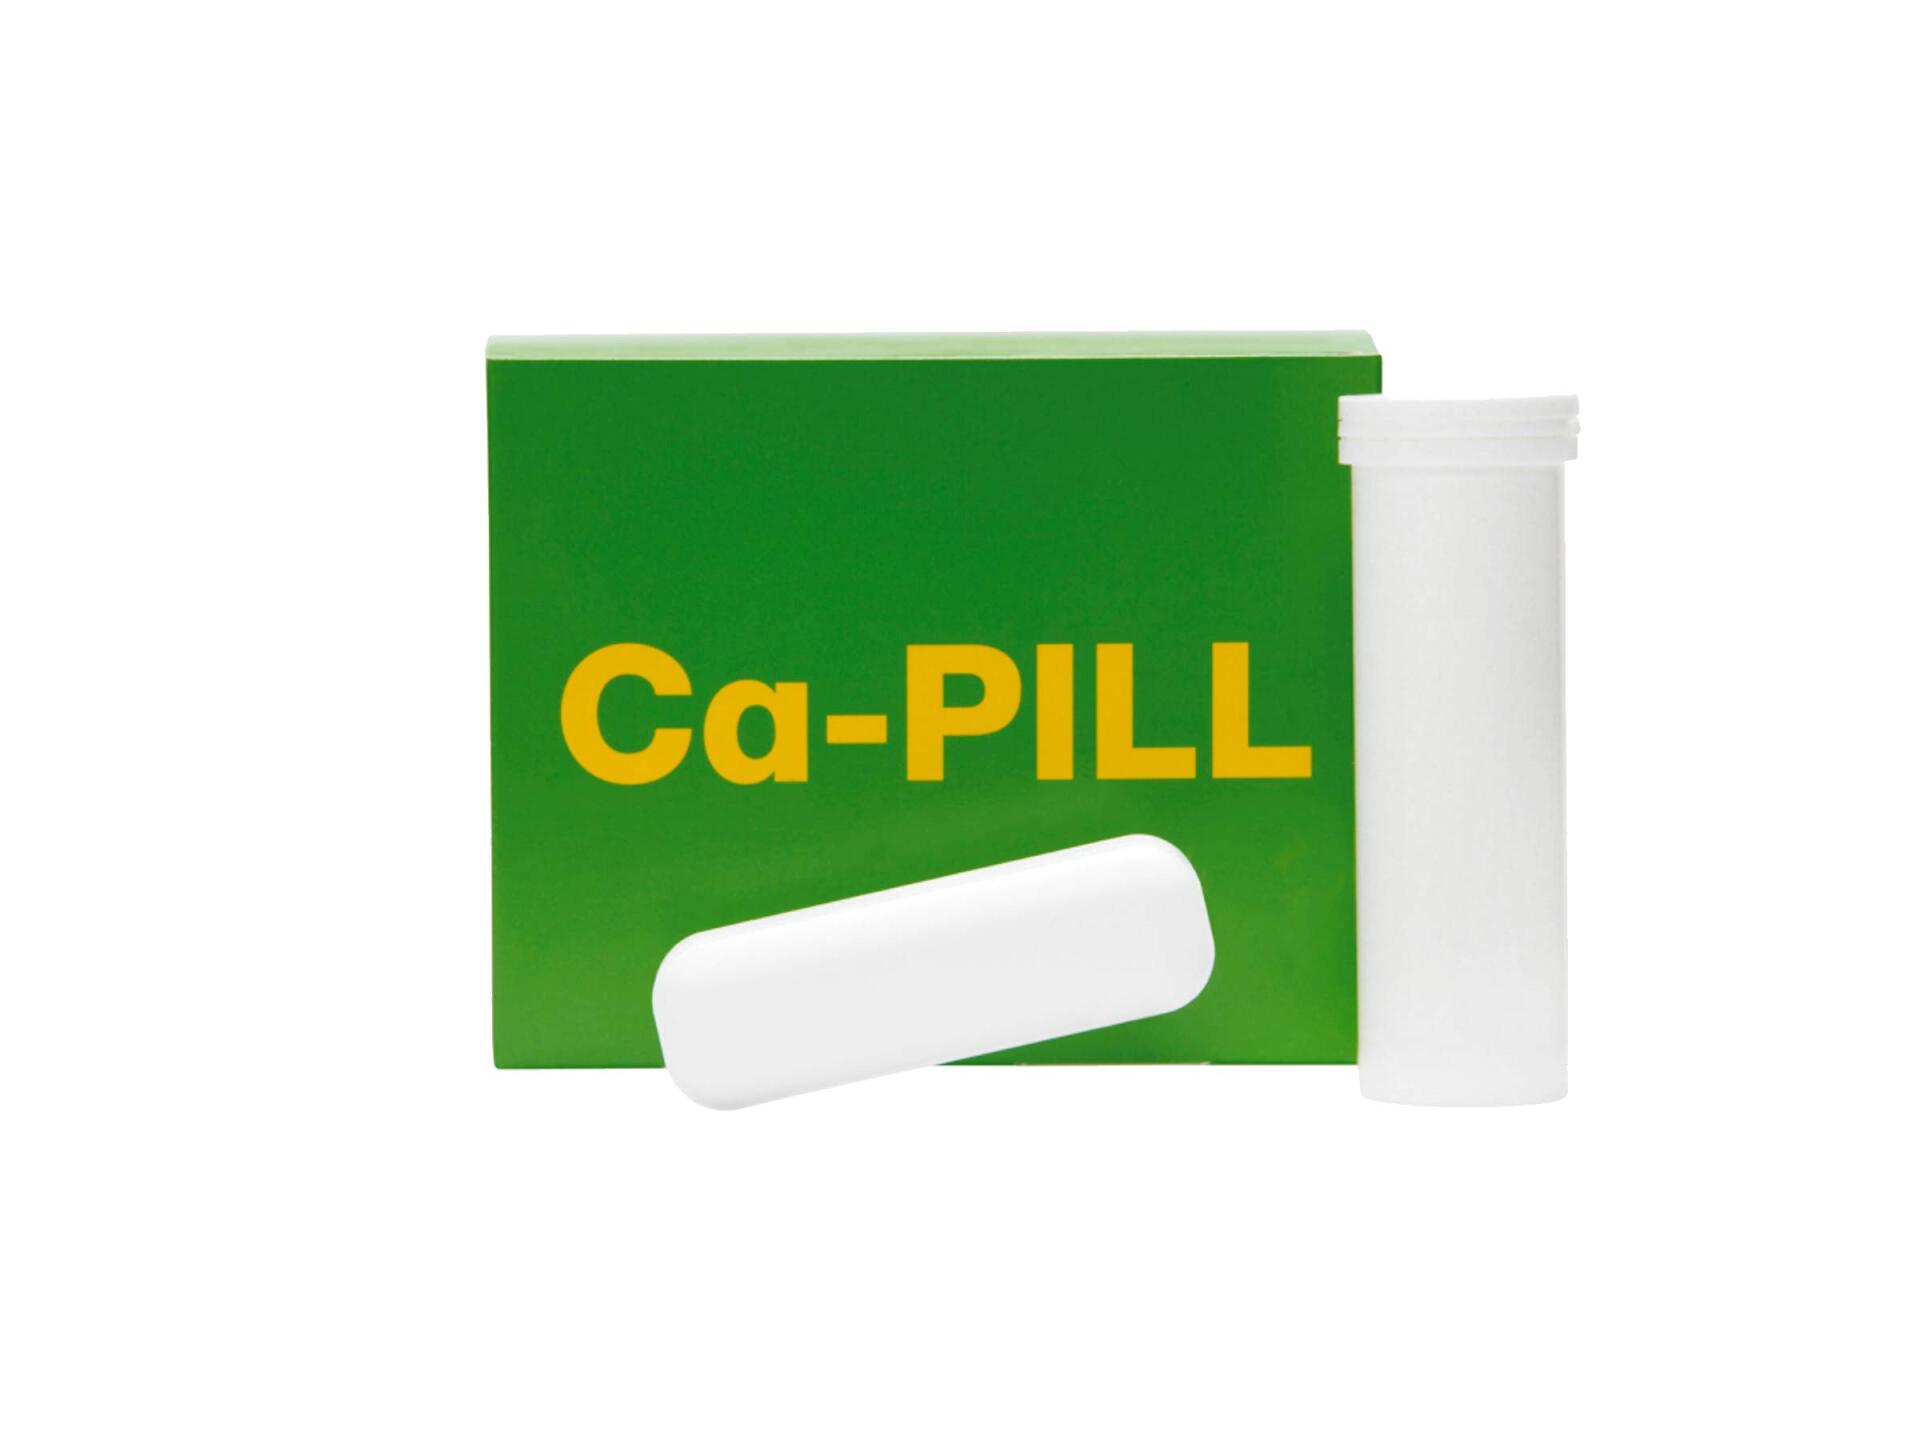 Calcium-Pille, C Pill, Calciummangel, Milchfieber, Milchfieber Kuh, Milchfieber kuh behandlung